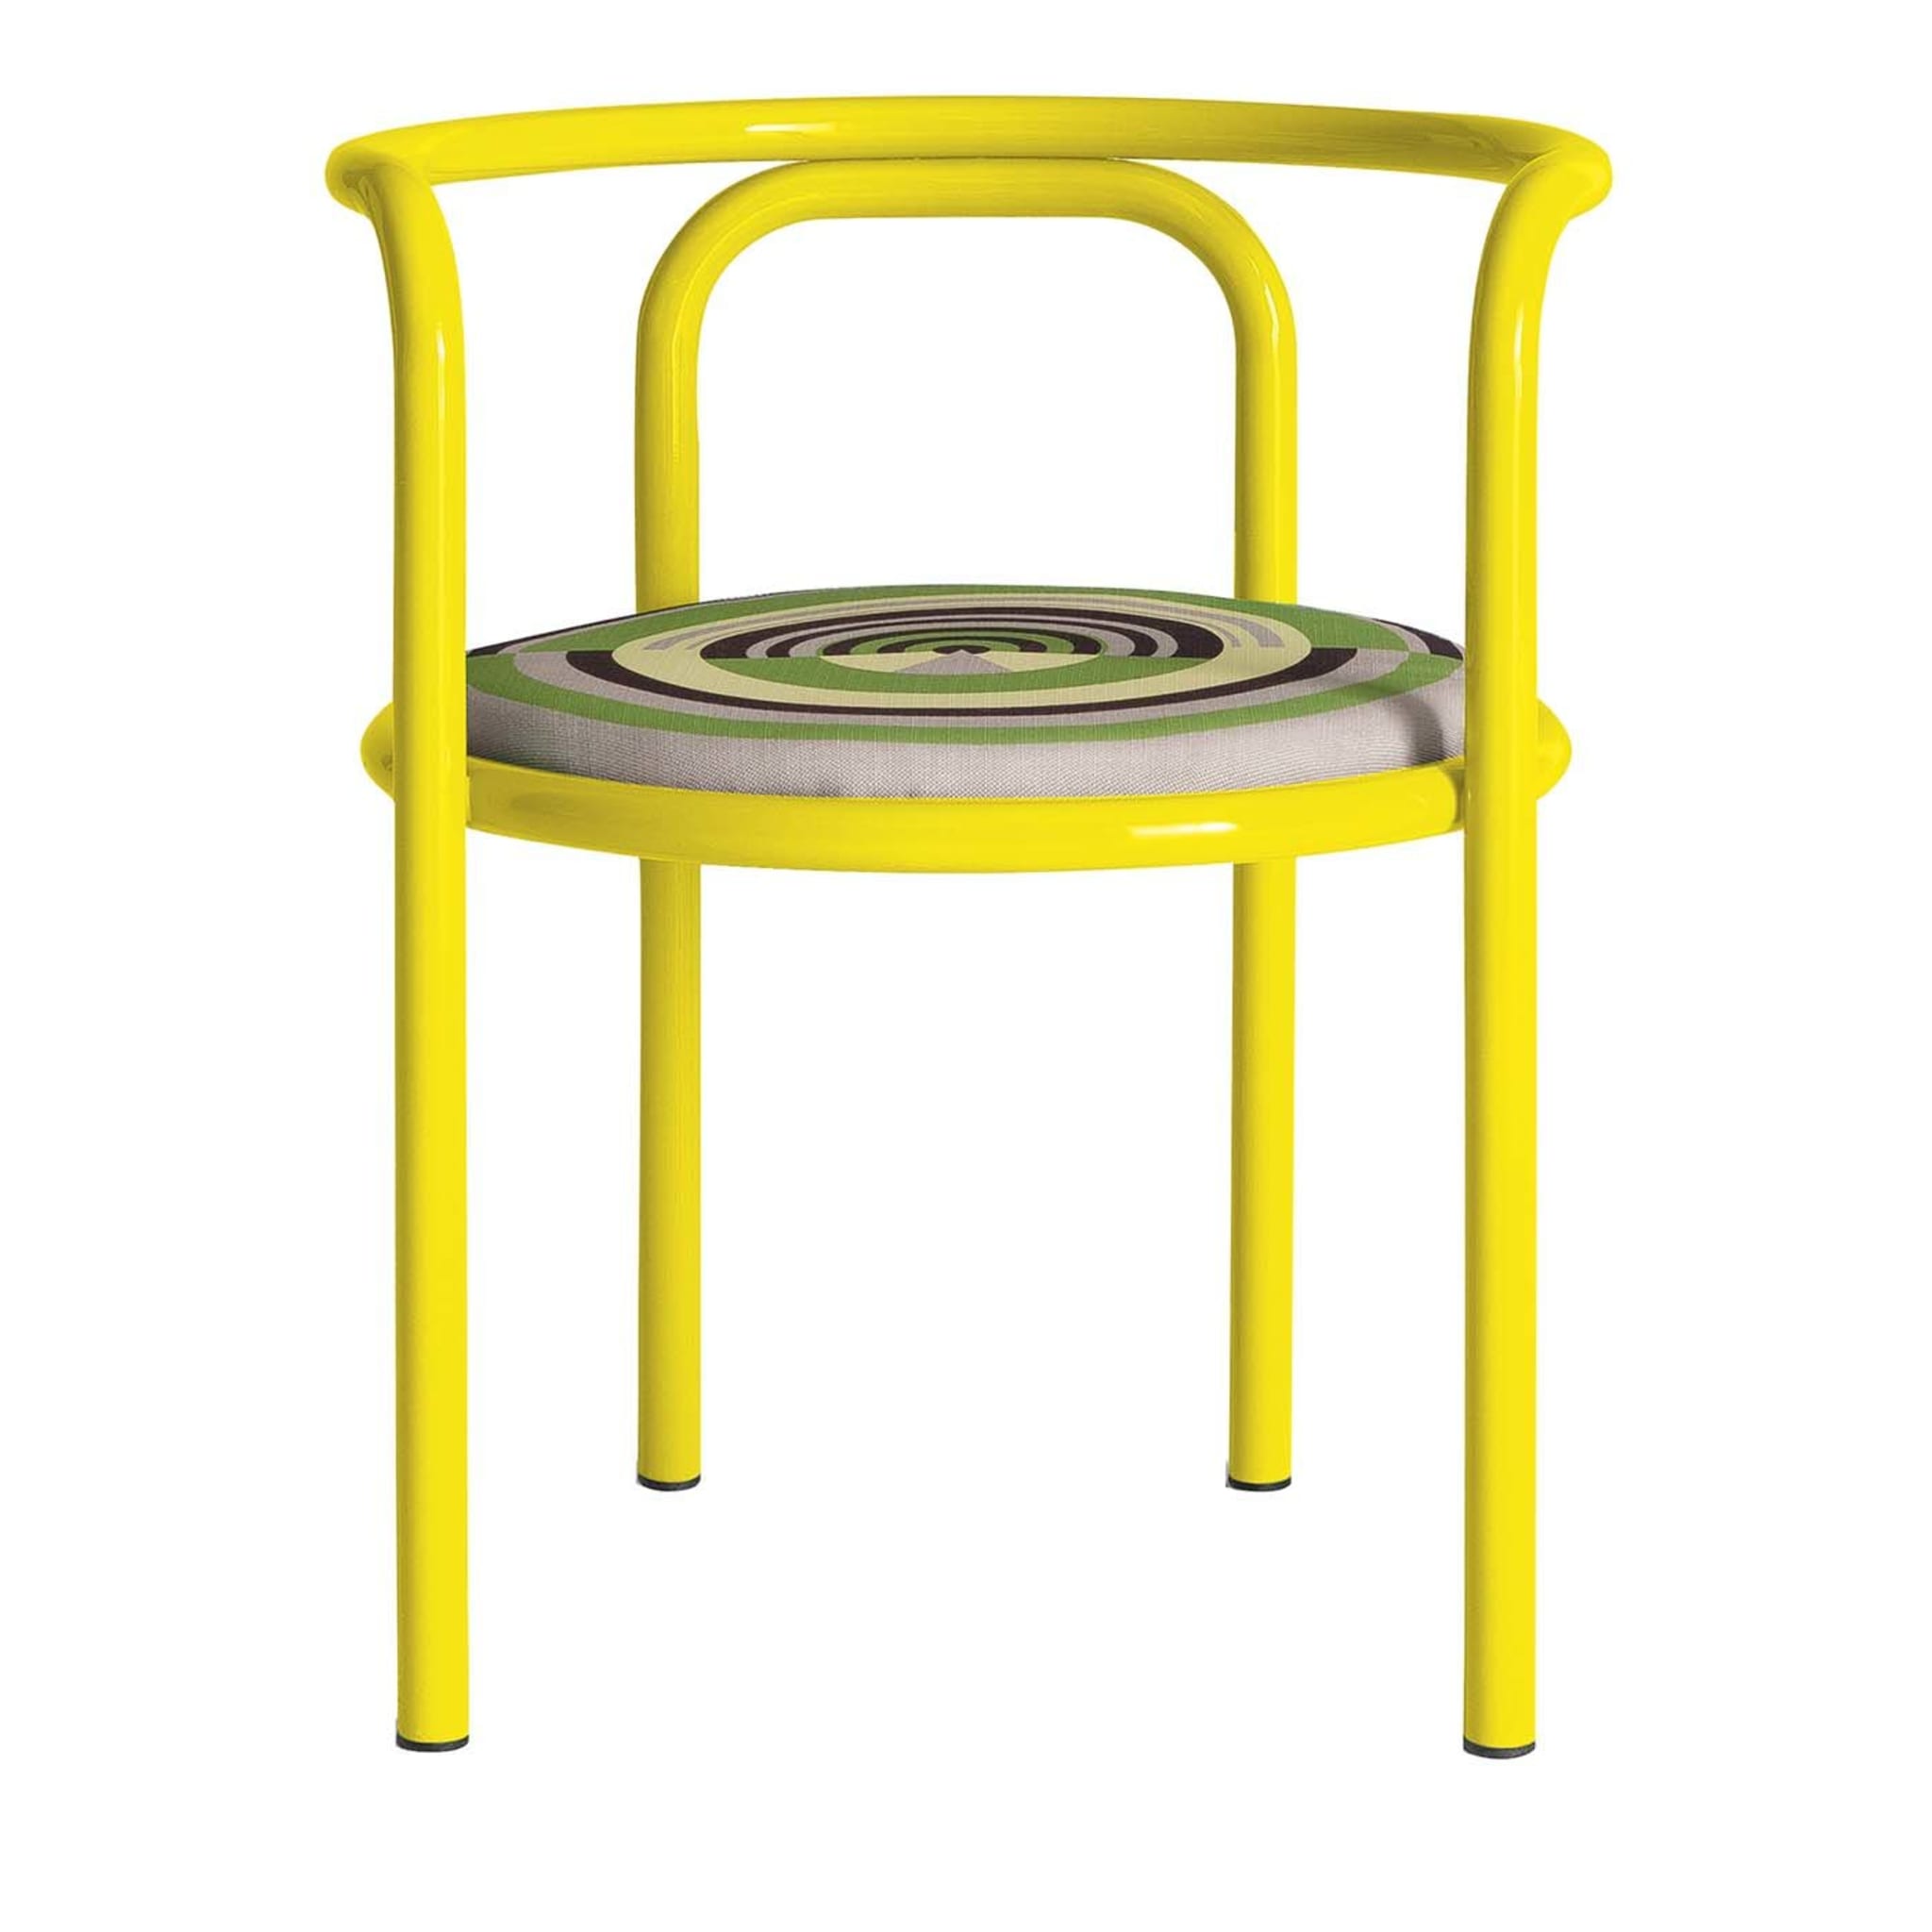 Locus Solus Yellow Chair by Gae Aulenti - Main view